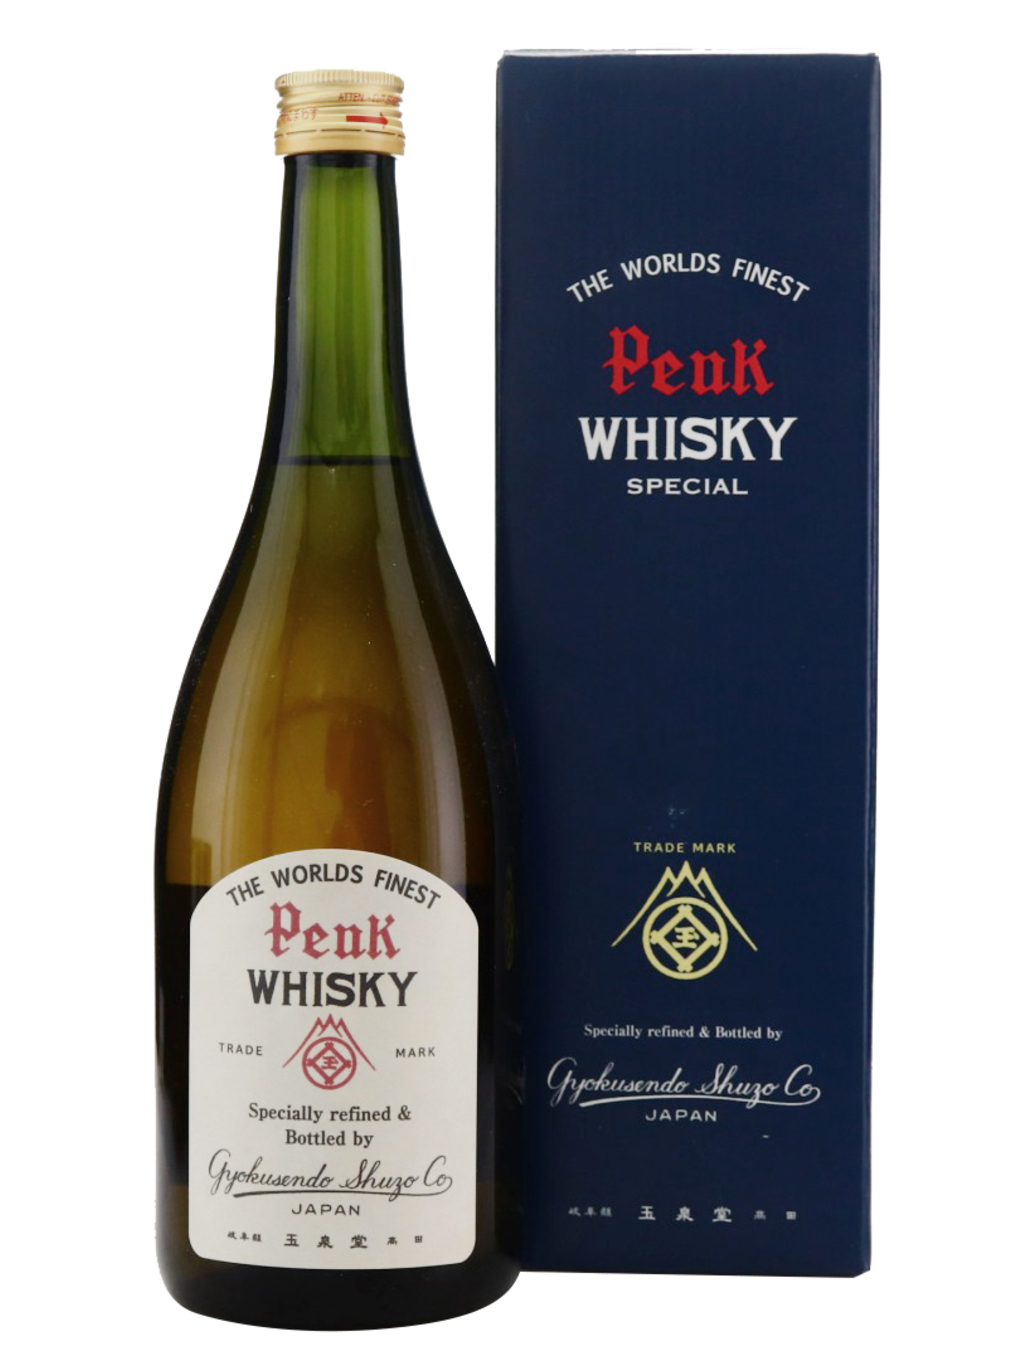 玉泉堂 威士忌 Peak Whisky Special 